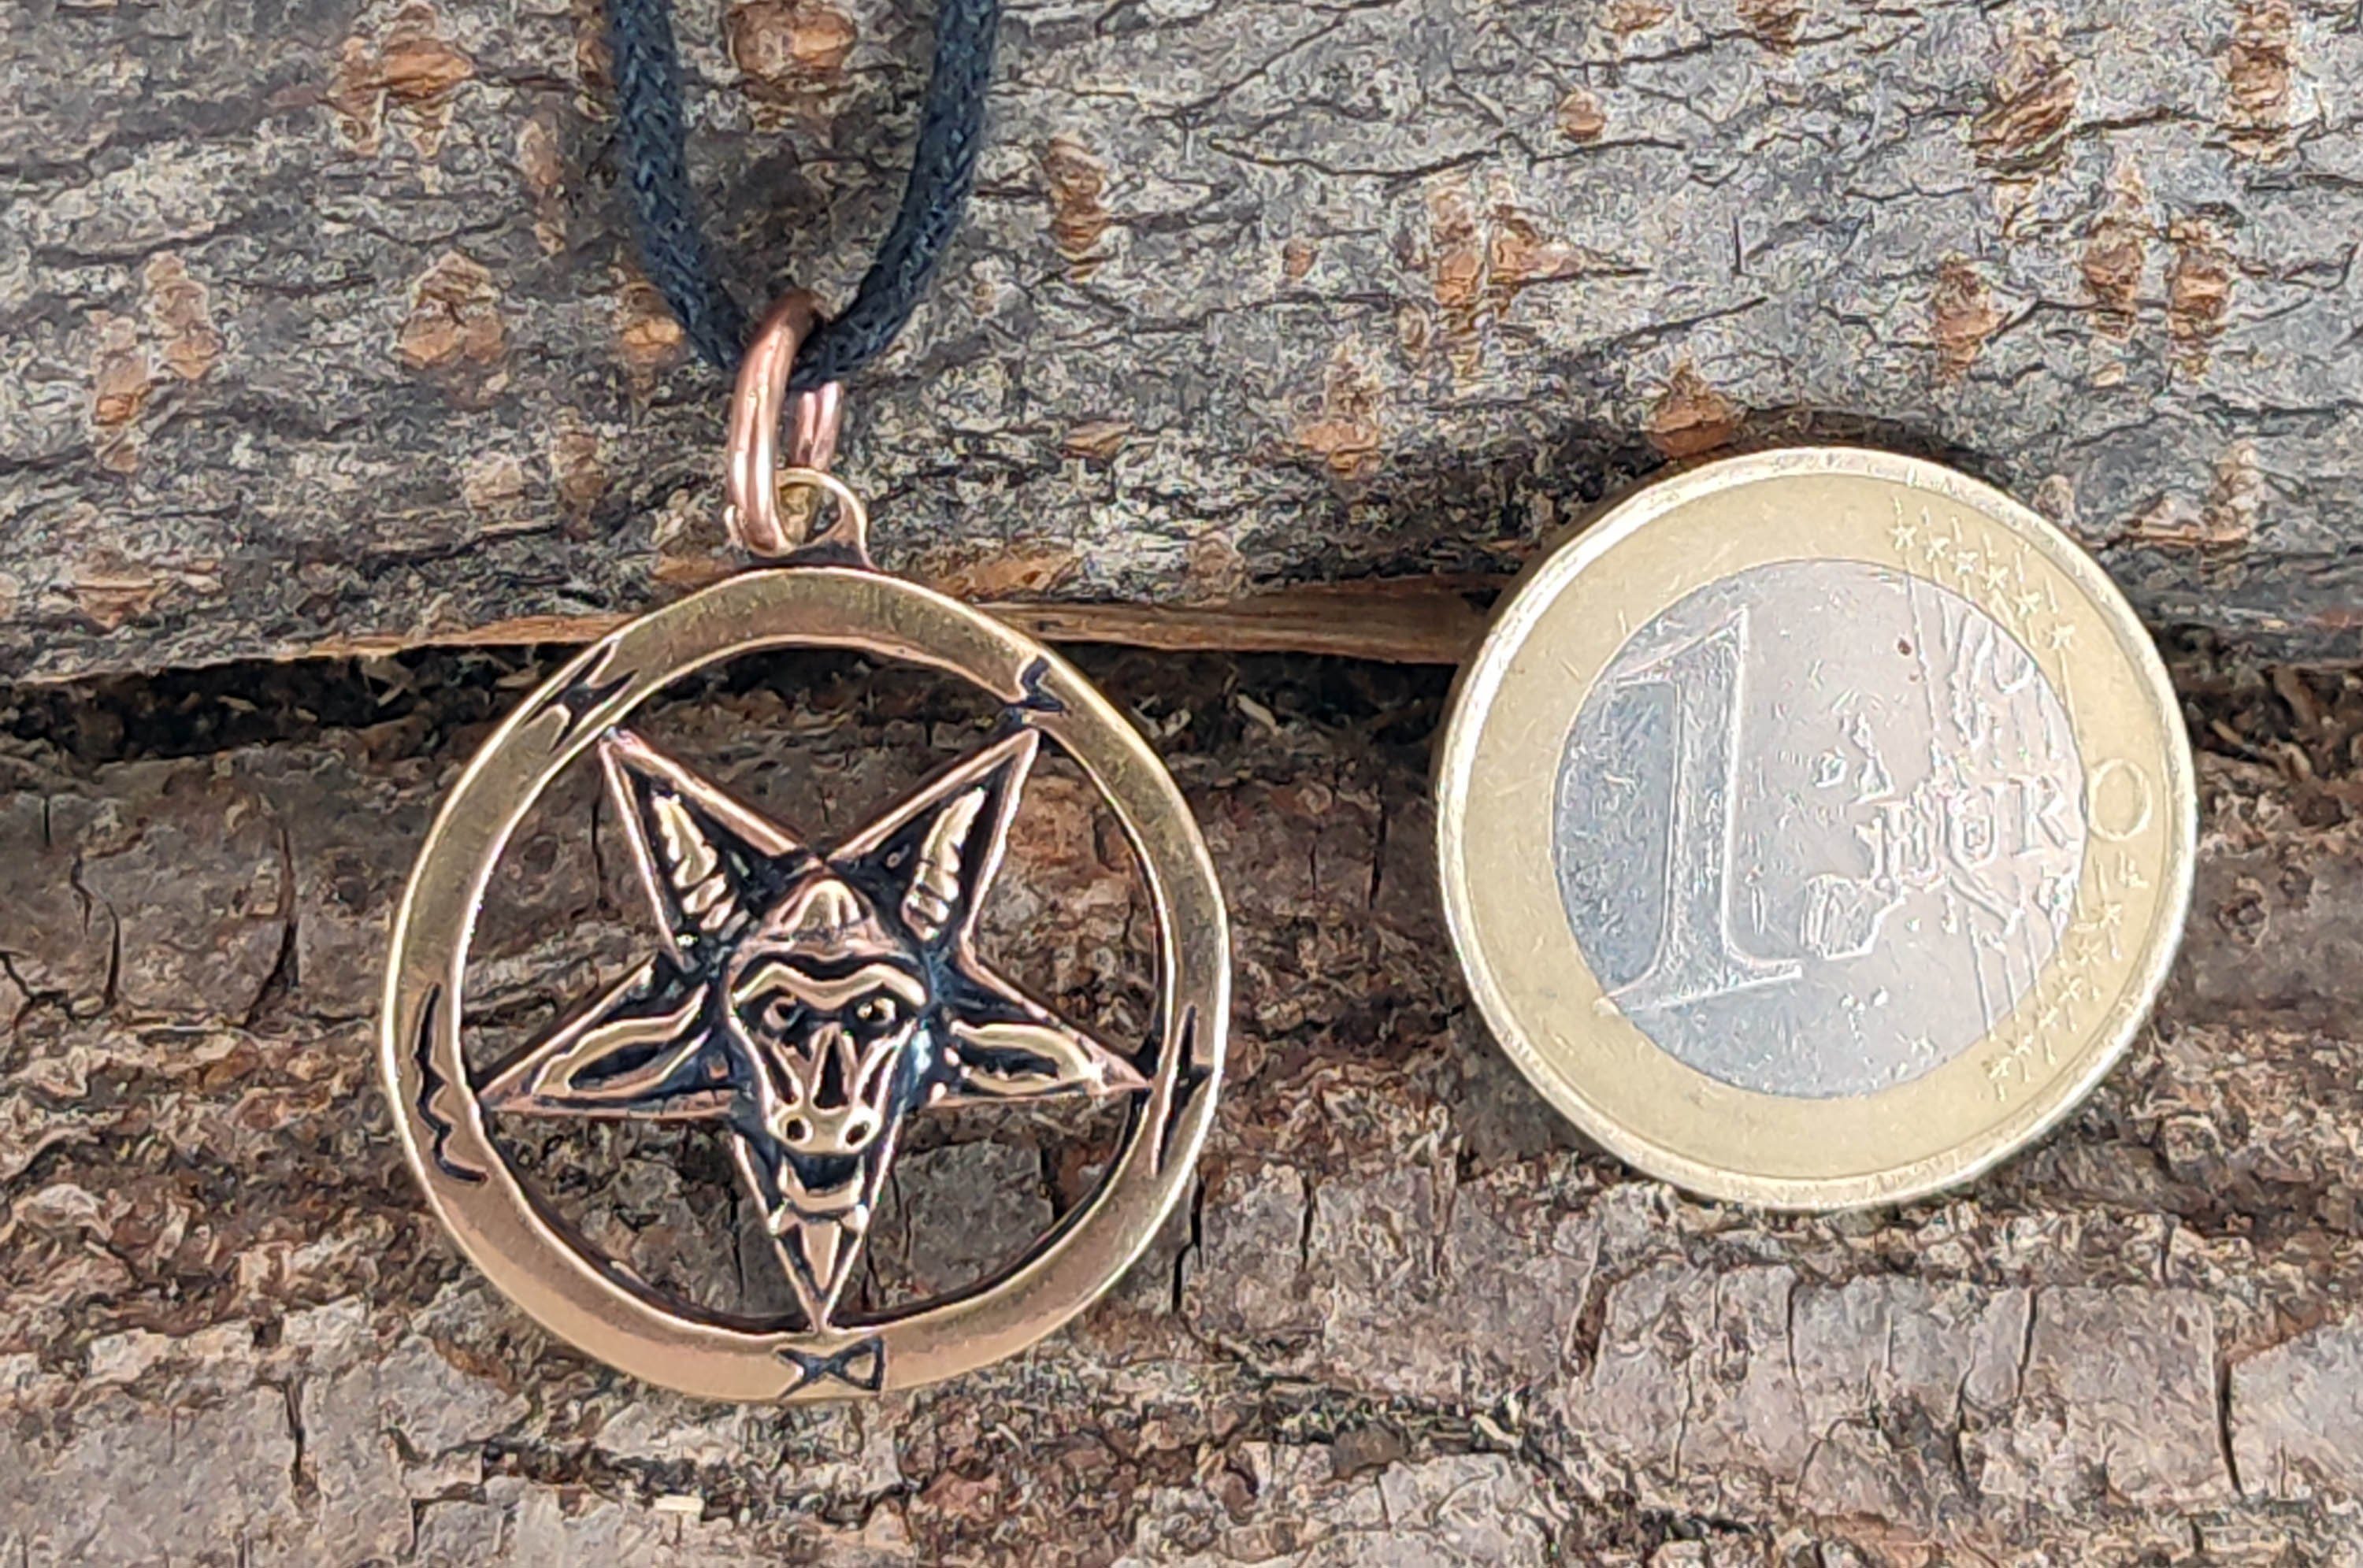 Leather Drudenfuß Satan Baphomet Anhänger Kiss schwarze Teufel of Bronze Kettenanhänger Magie Pentagramm